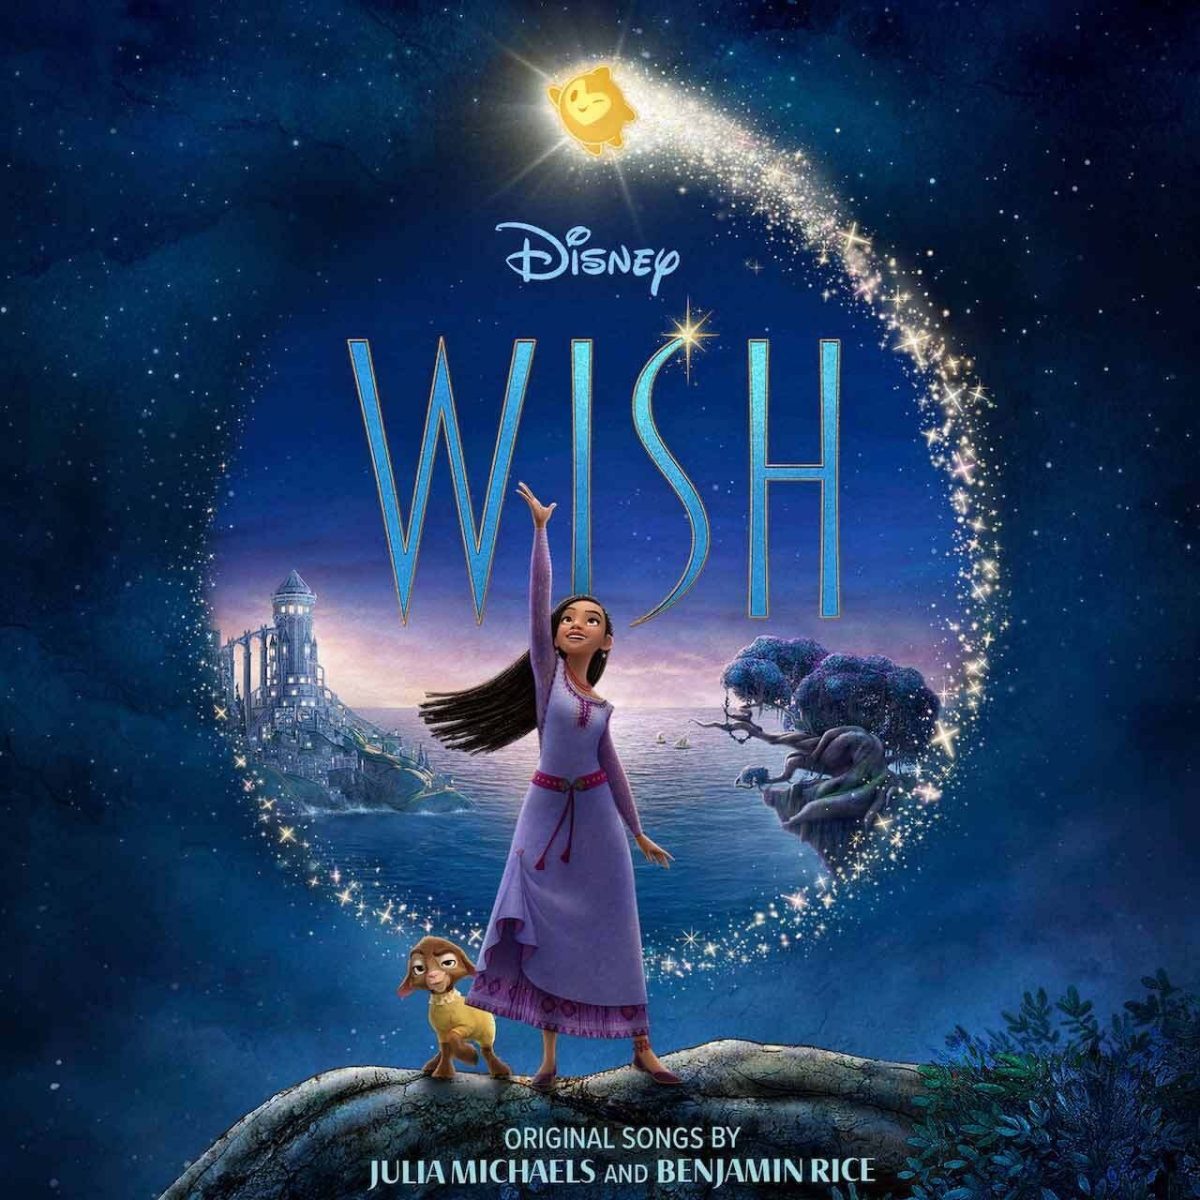 Disneys+new+movie%3A+Wish